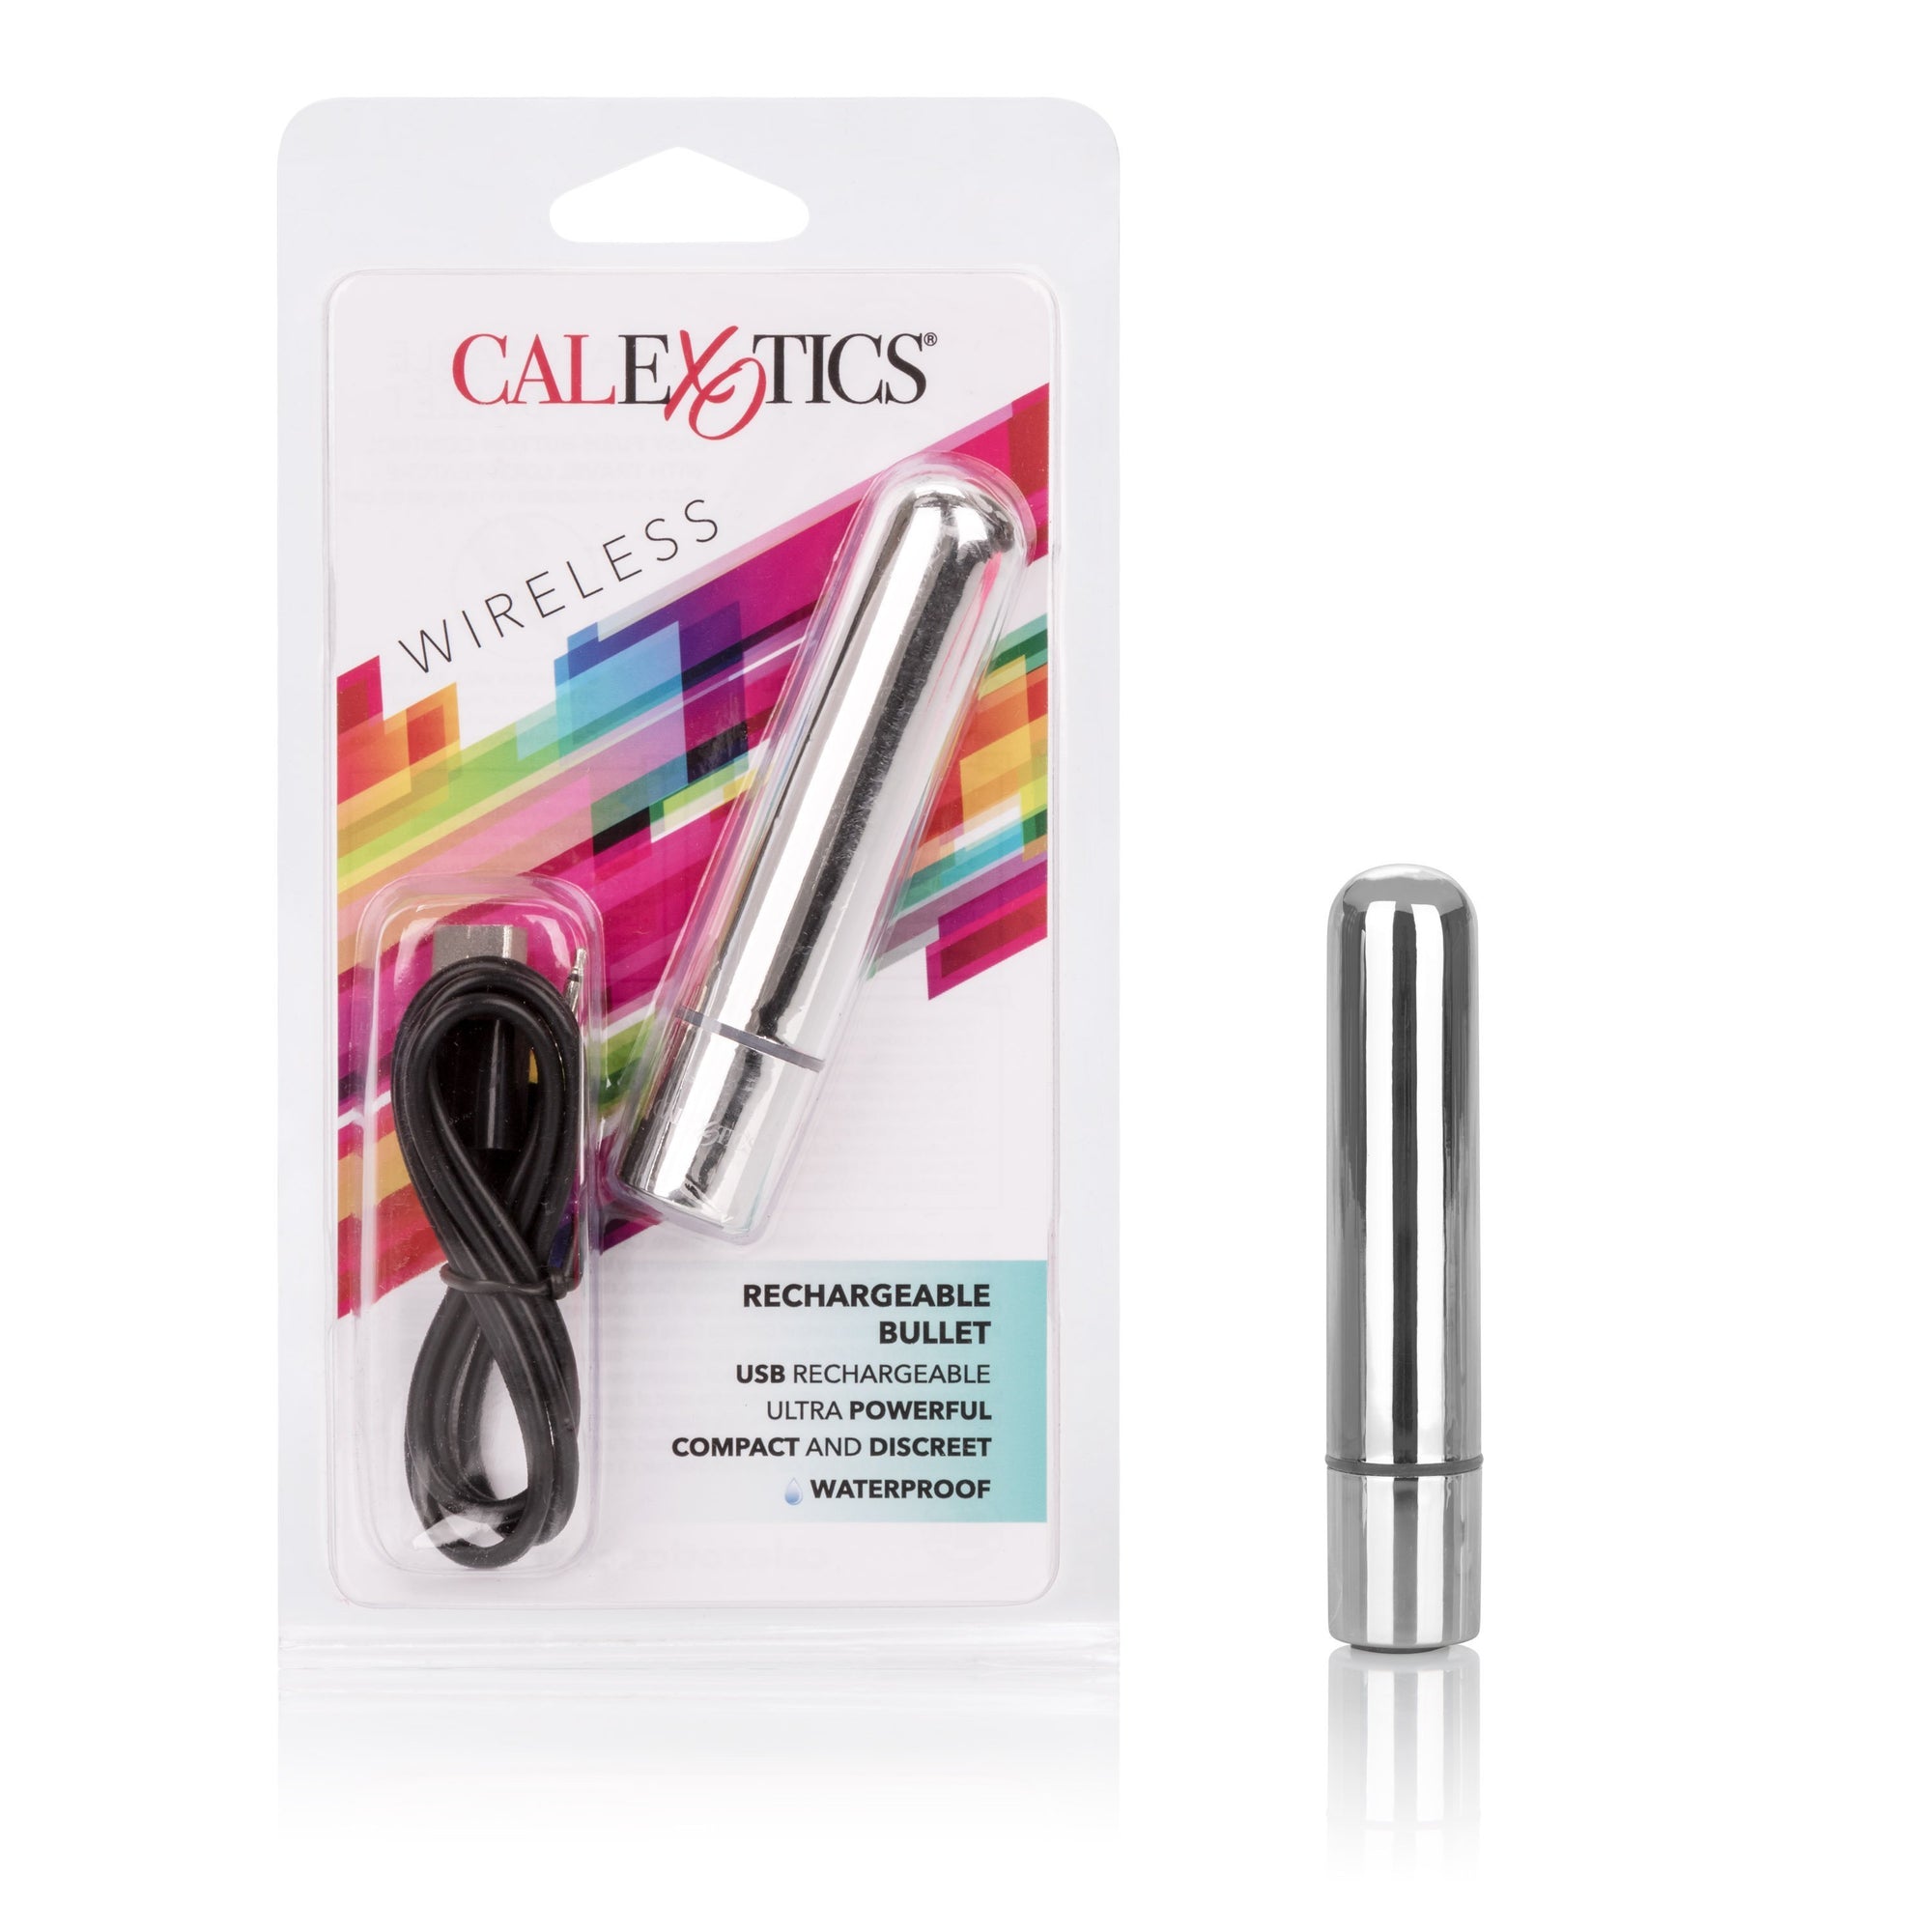 California Exotics - Wireless USB Rechargeable Bullet Vibrator (Silver) Bullet (Vibration) Rechargeable Durio Asia